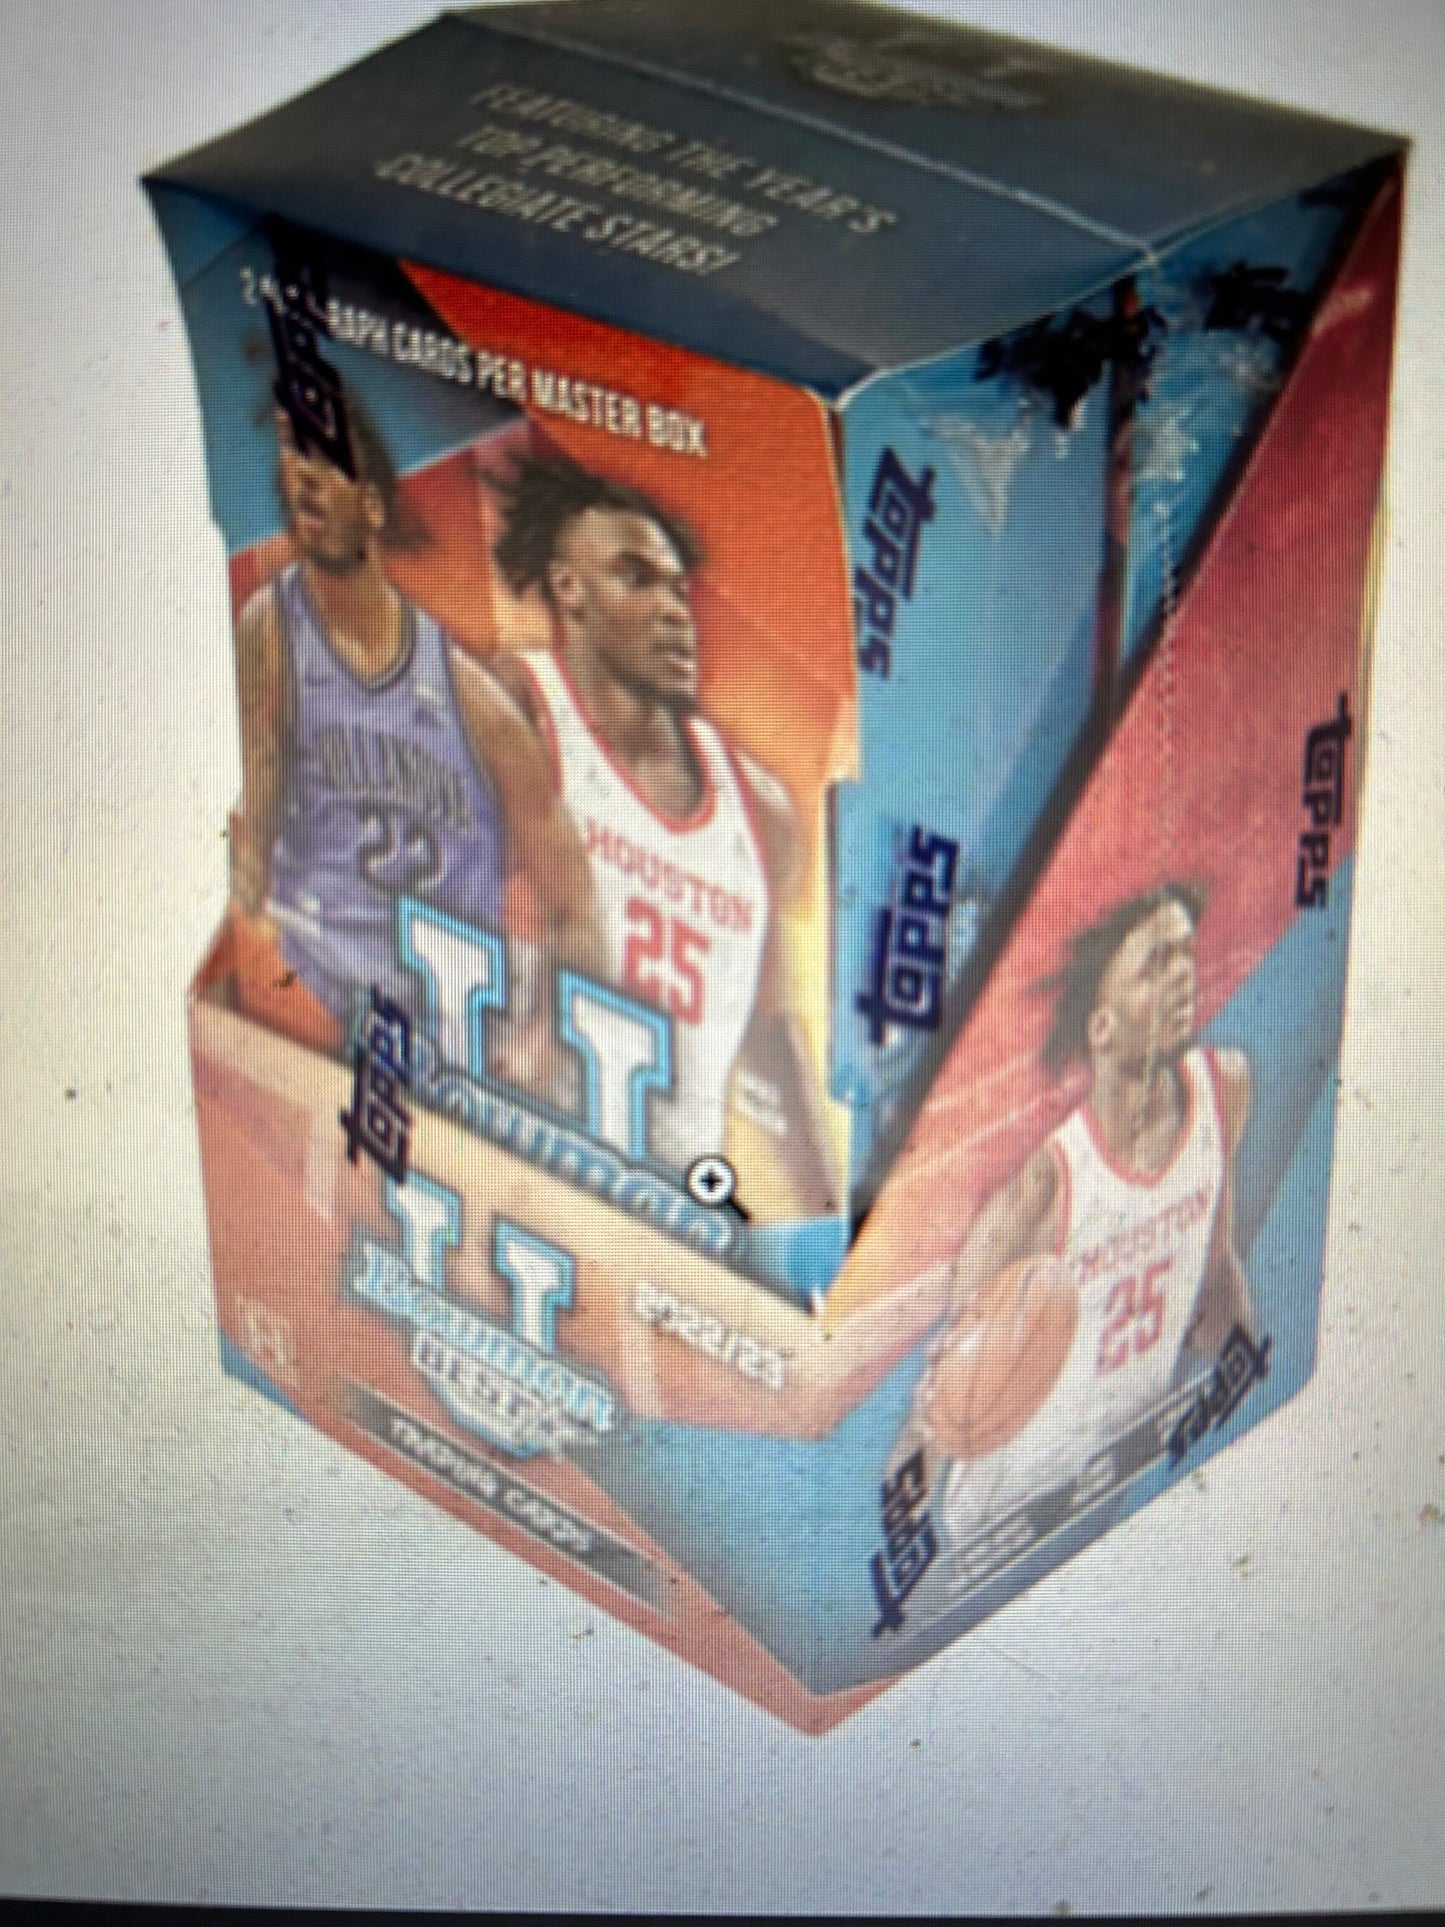 2022/23 Bowman University's Best Basketball Hobby Box